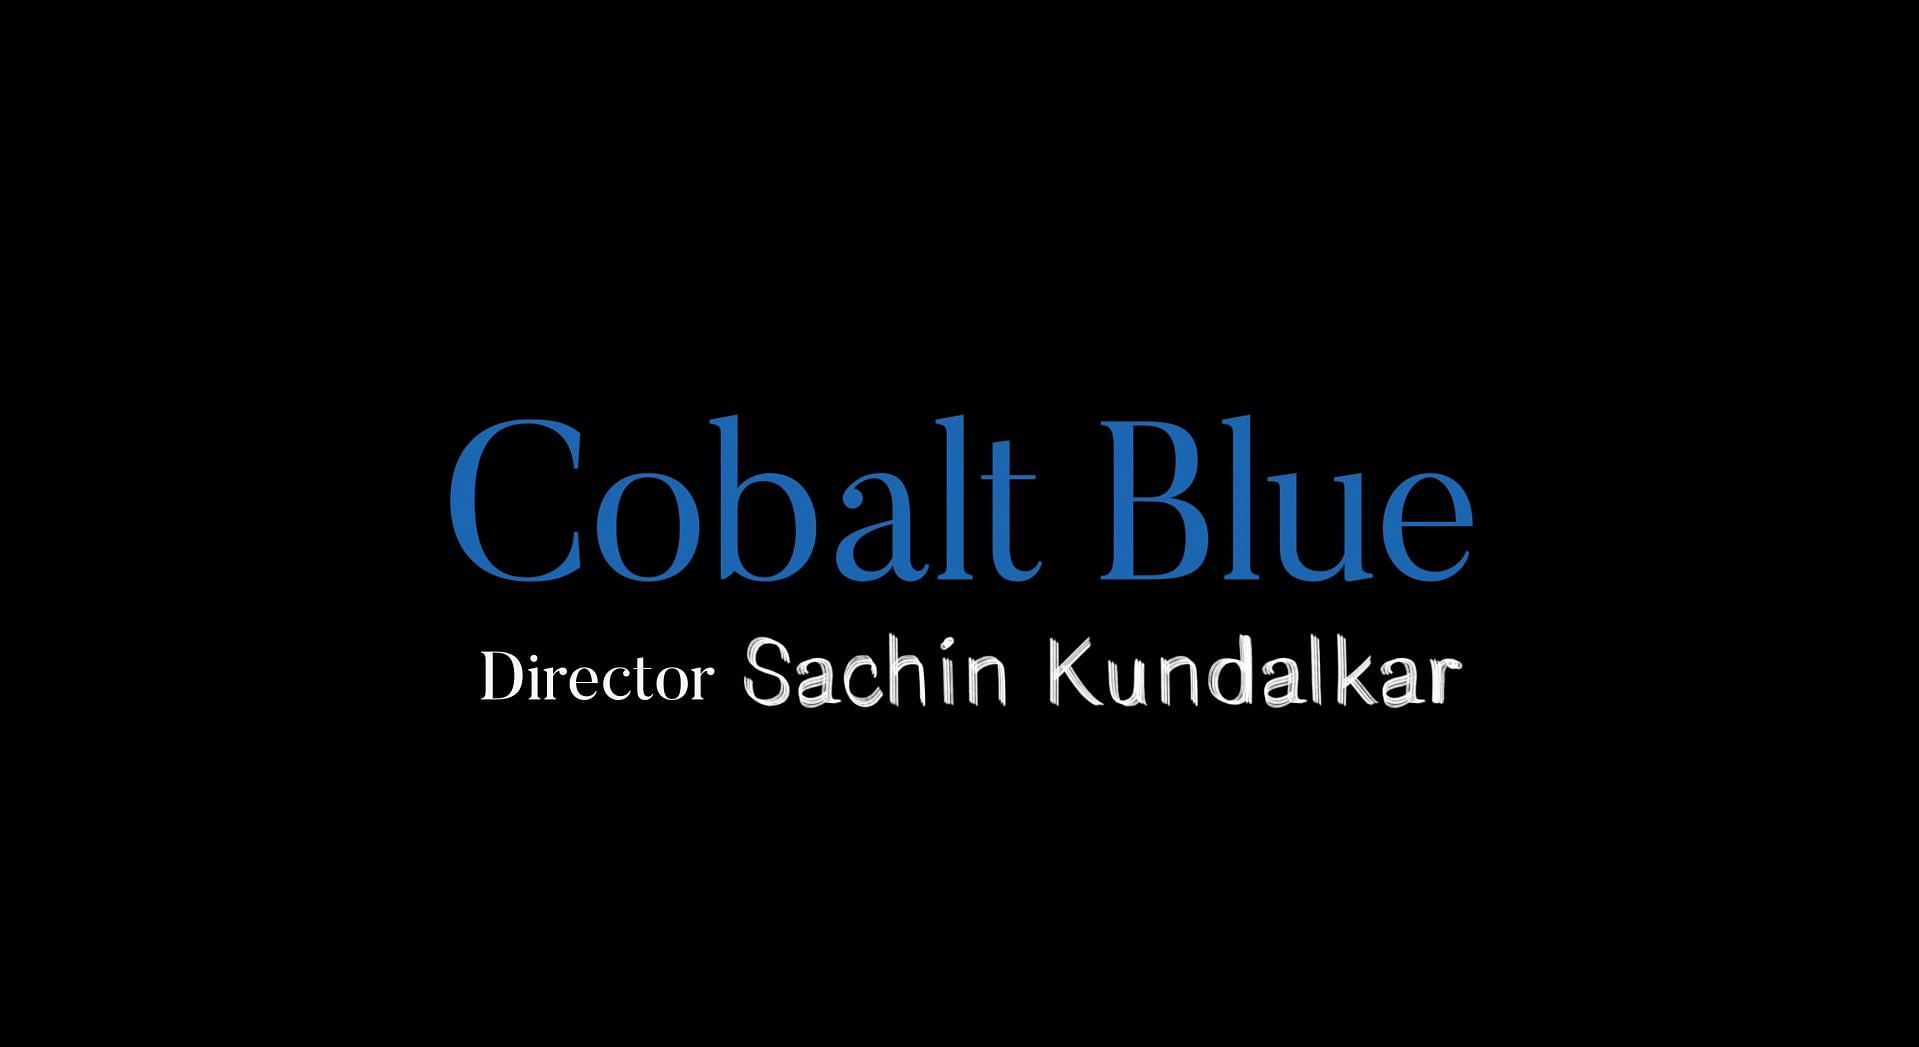 Cobalt Blue (Image via Netflix)